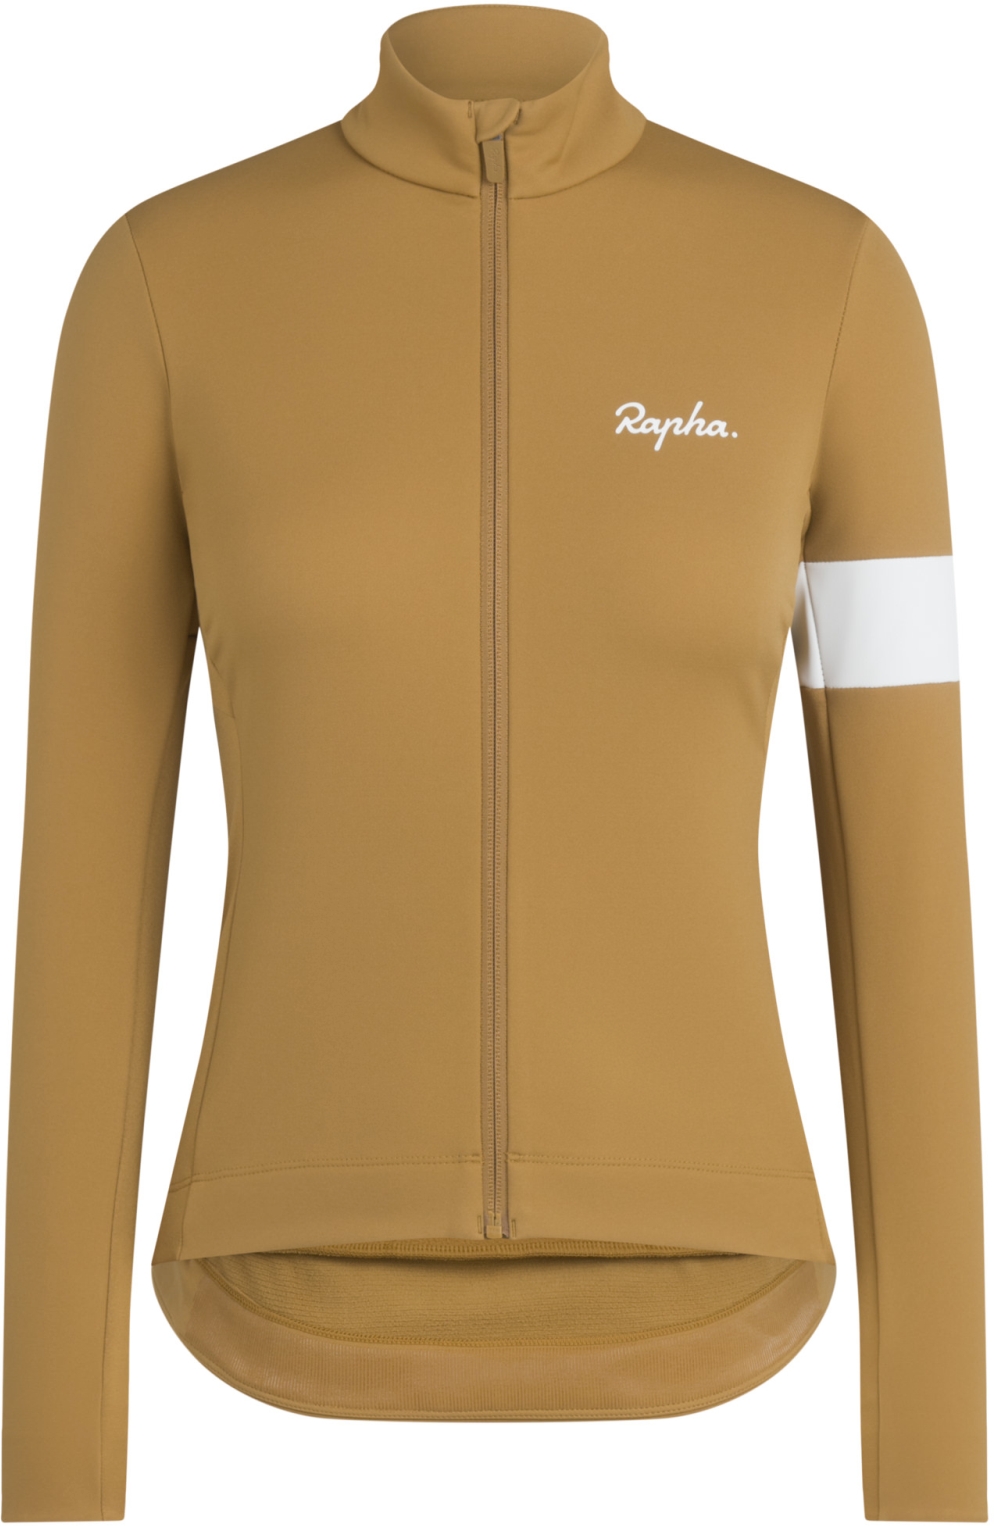 E-shop Rapha Women's Core Winter Jacket - Faded Gold / White M